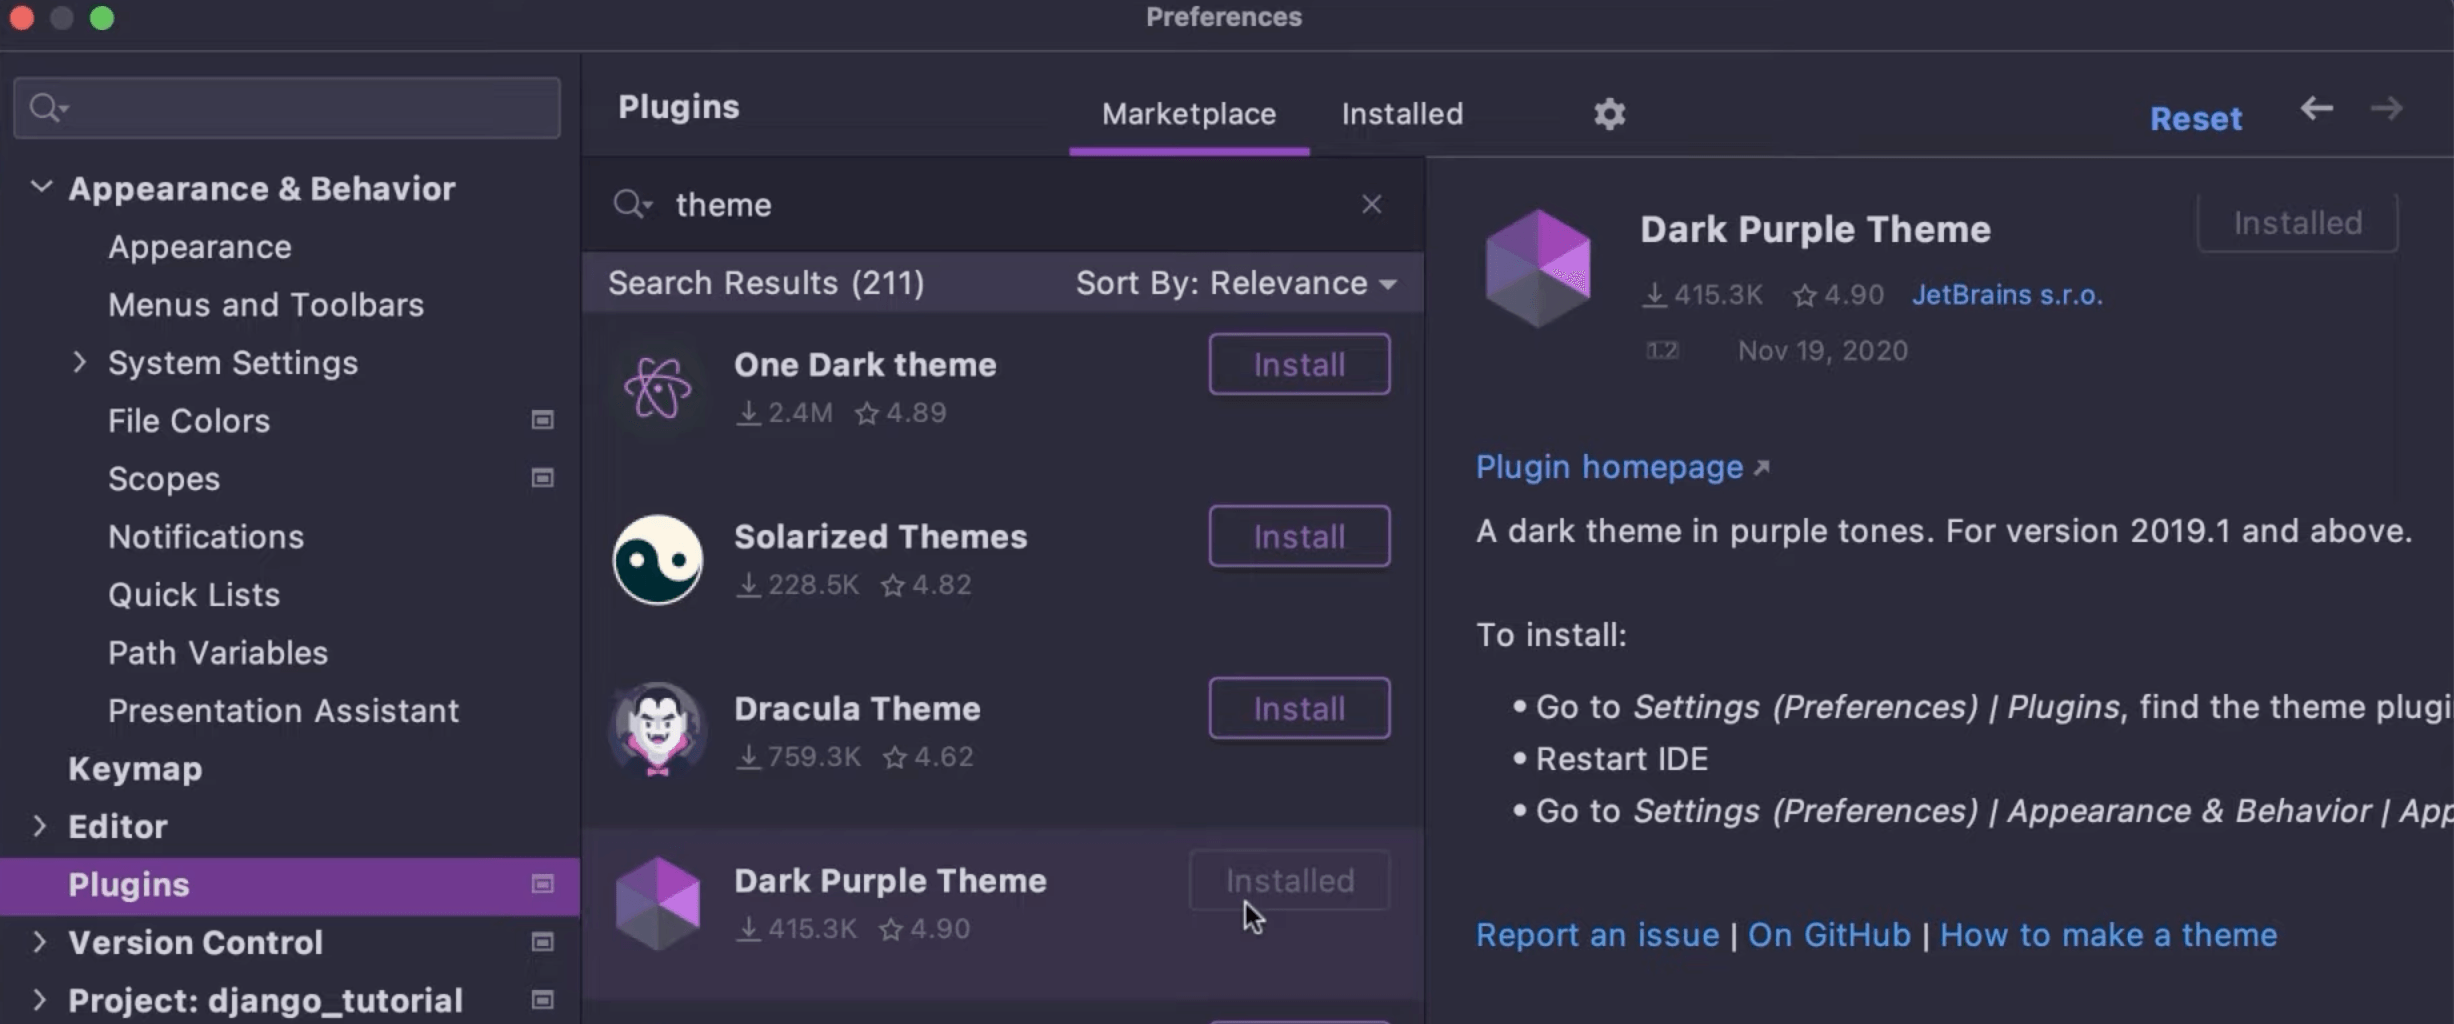 Dark purple theme